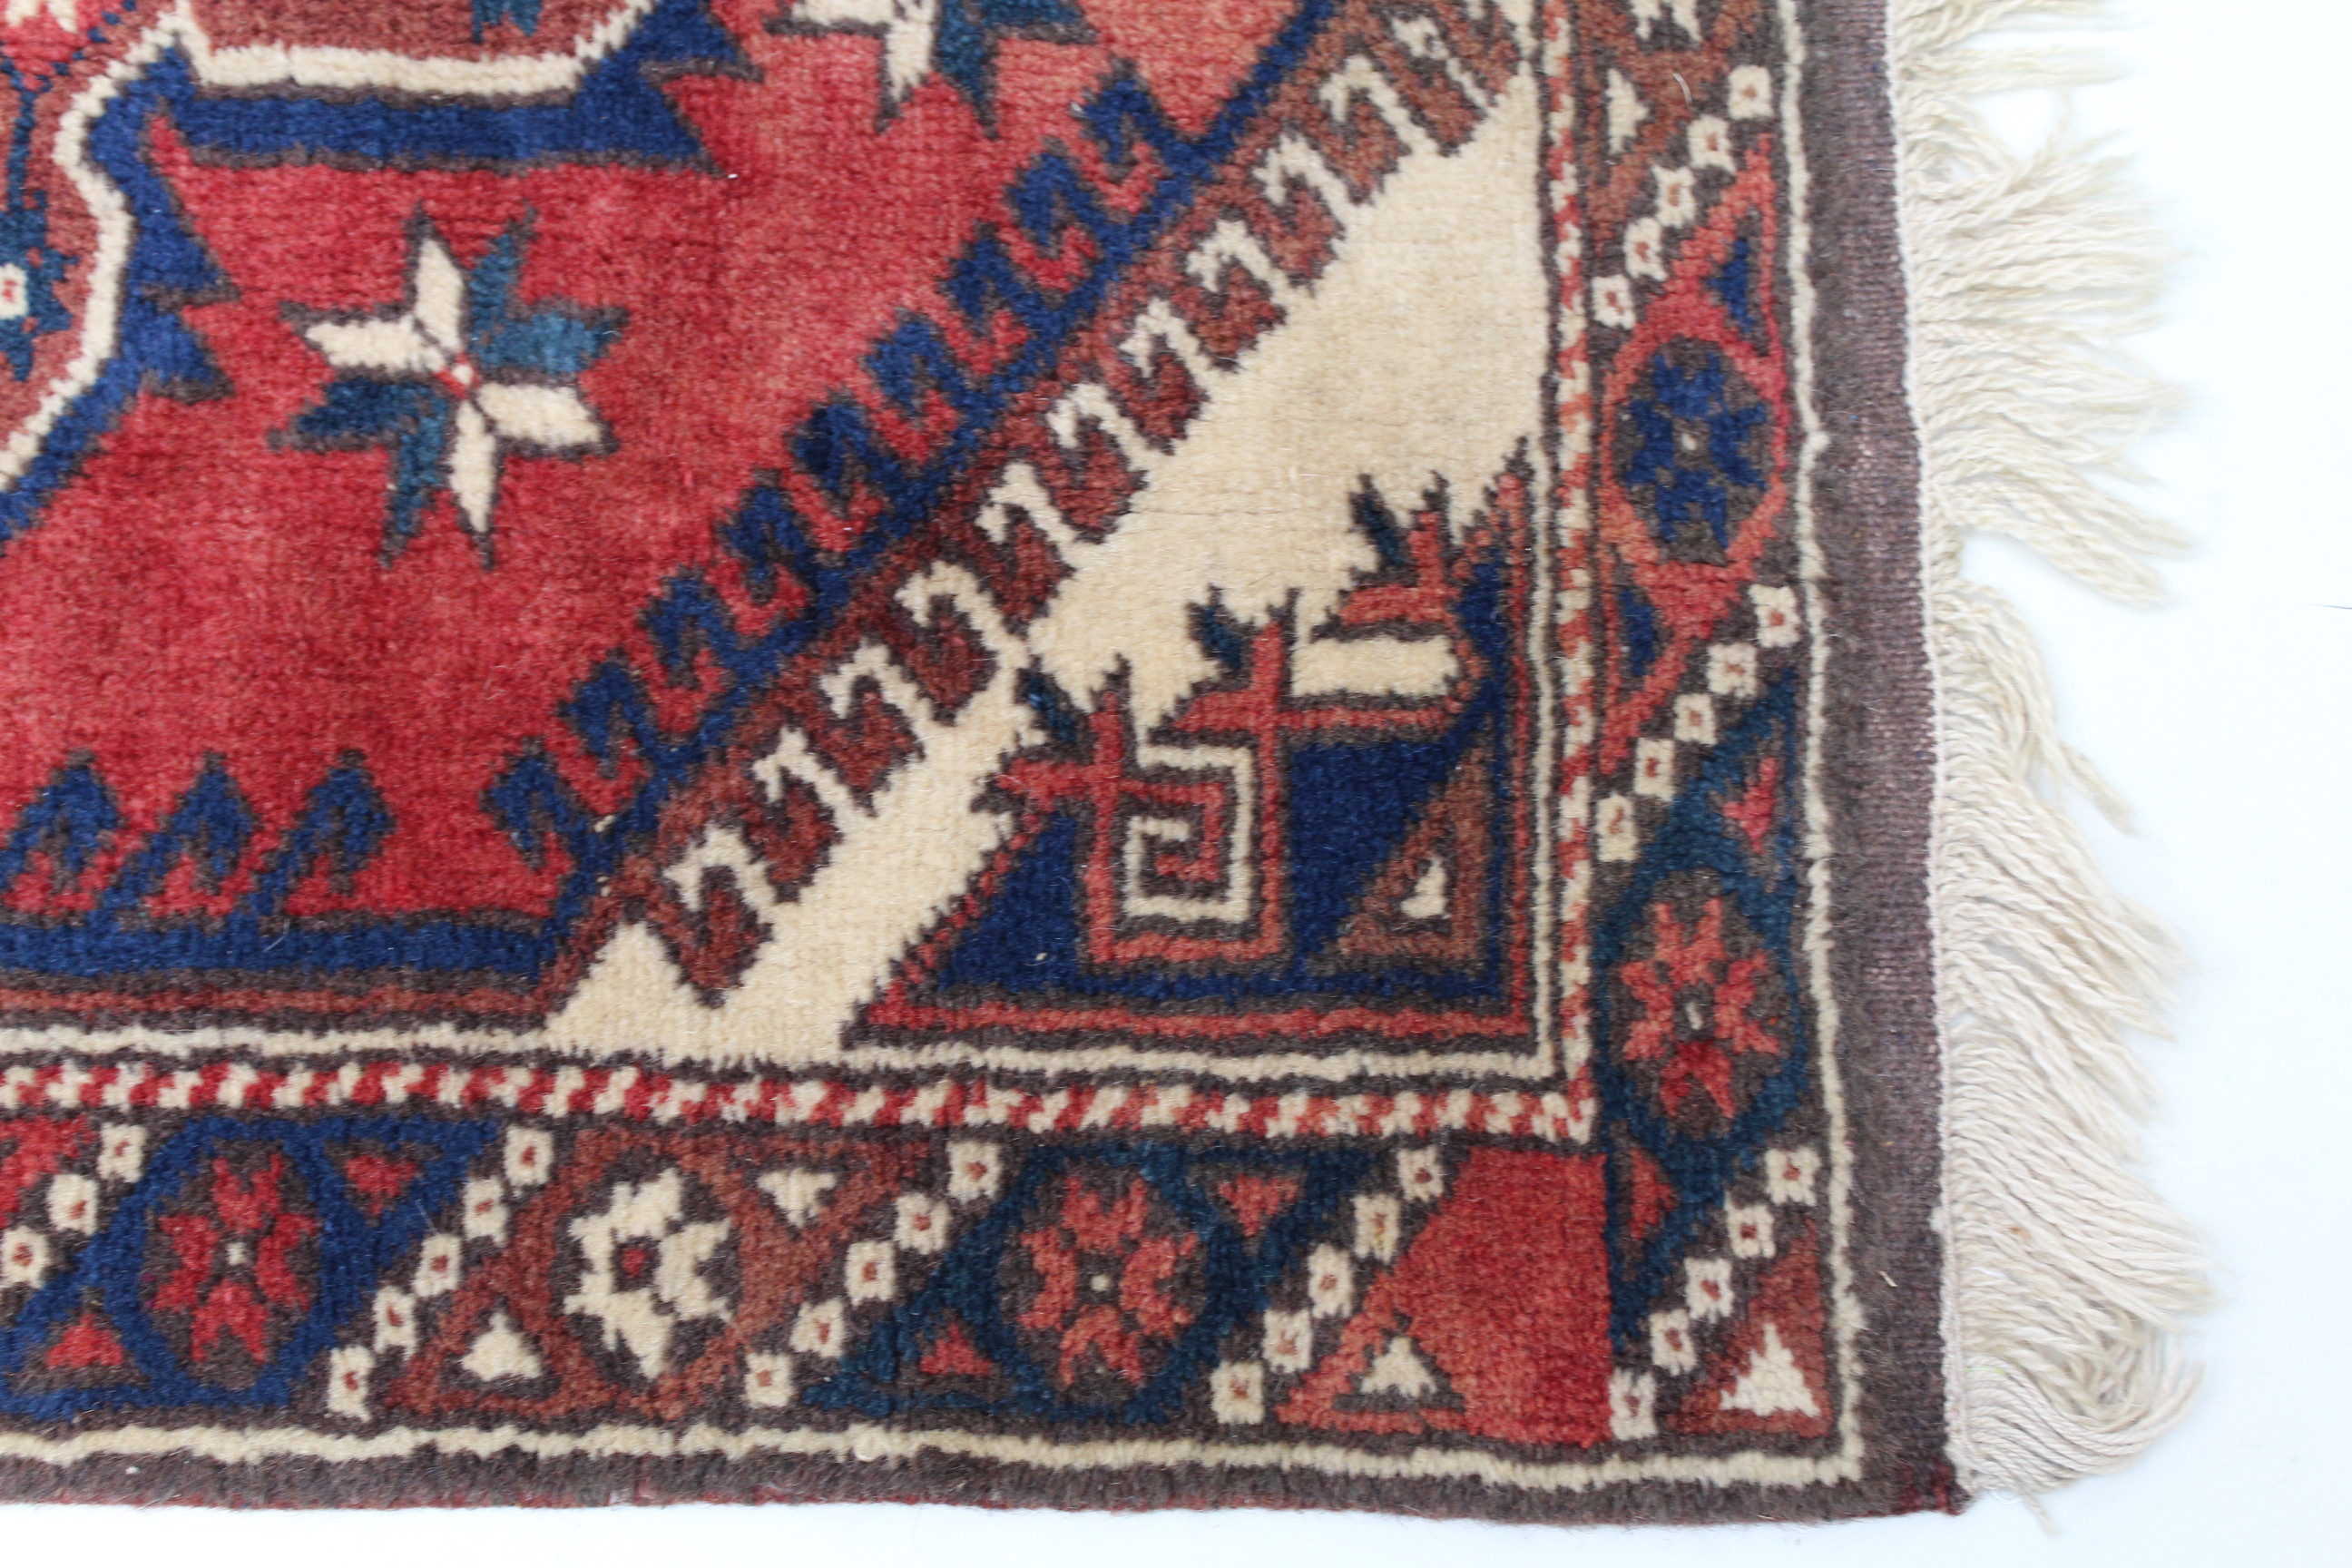 A TURKISH VILLAGE DOSEMEALTI RUG, having brick red field, with stylized geometric decoration, - Image 2 of 3